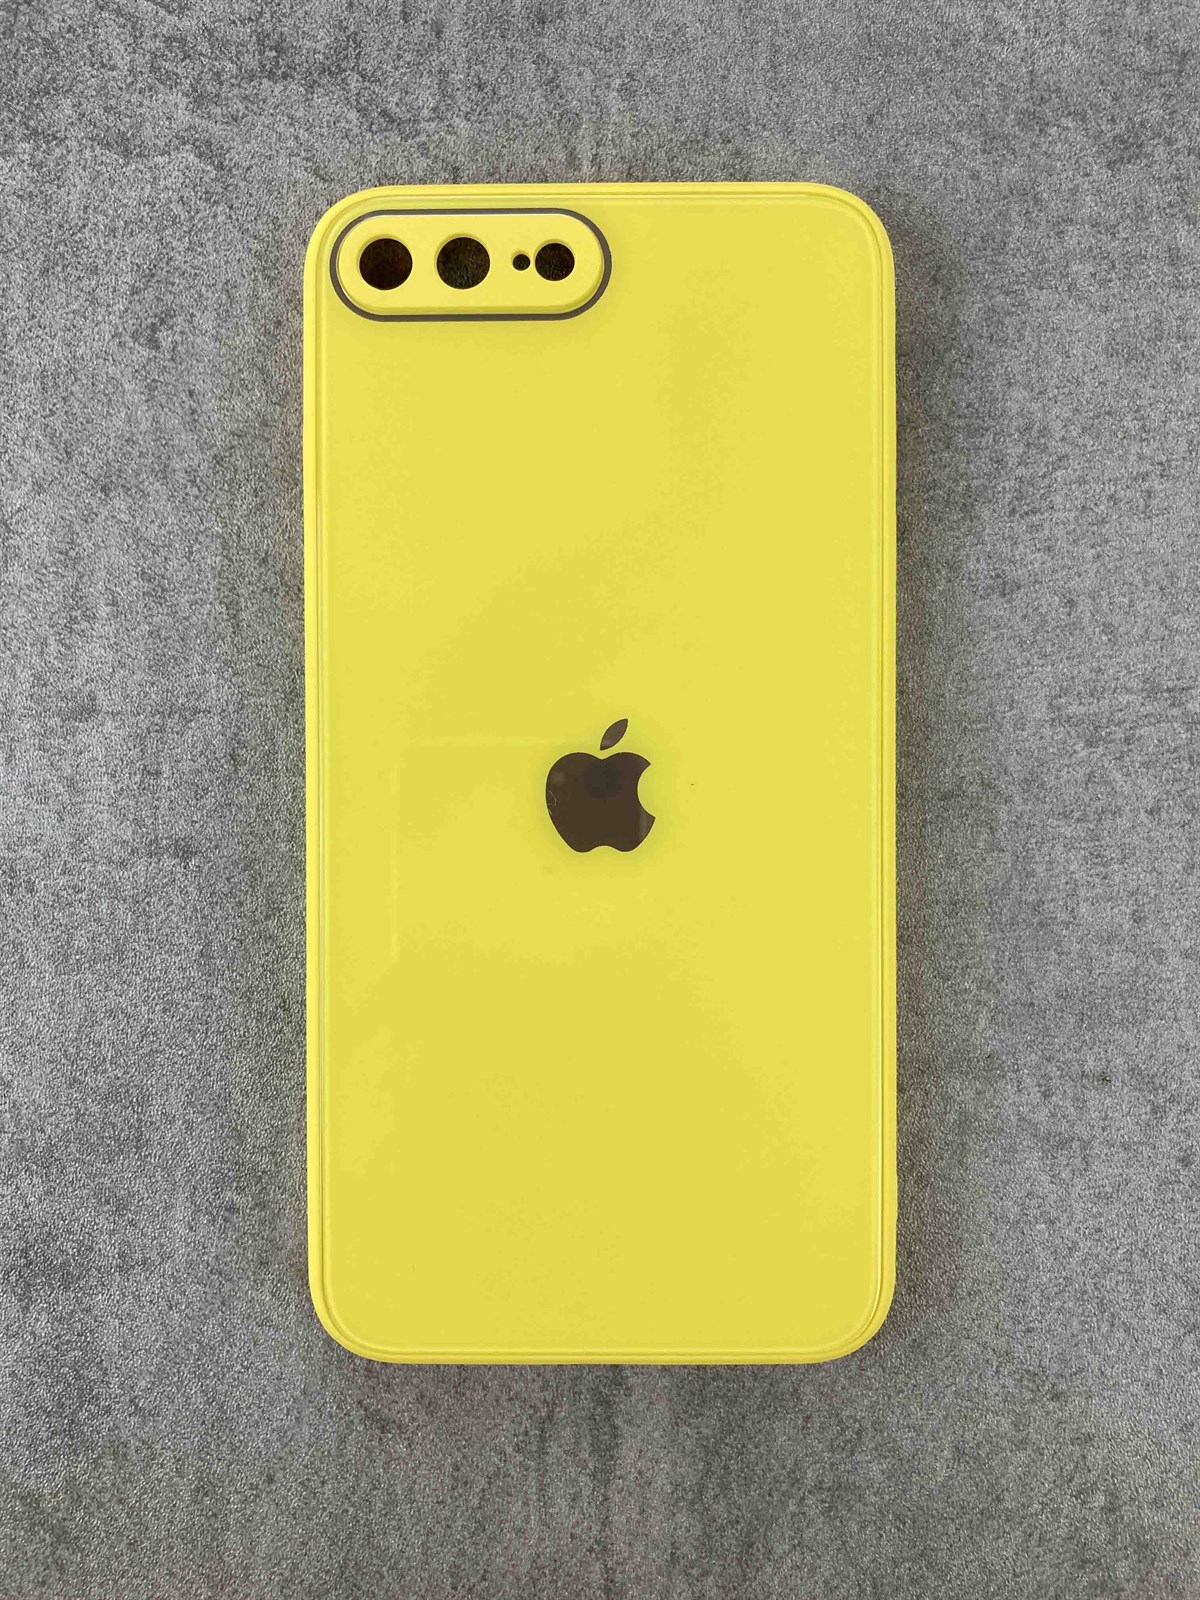 iPhone Sarı Kamera Korumalı Cam Kılıf 7 Plus /8 Plus | Konsept Aksesuar